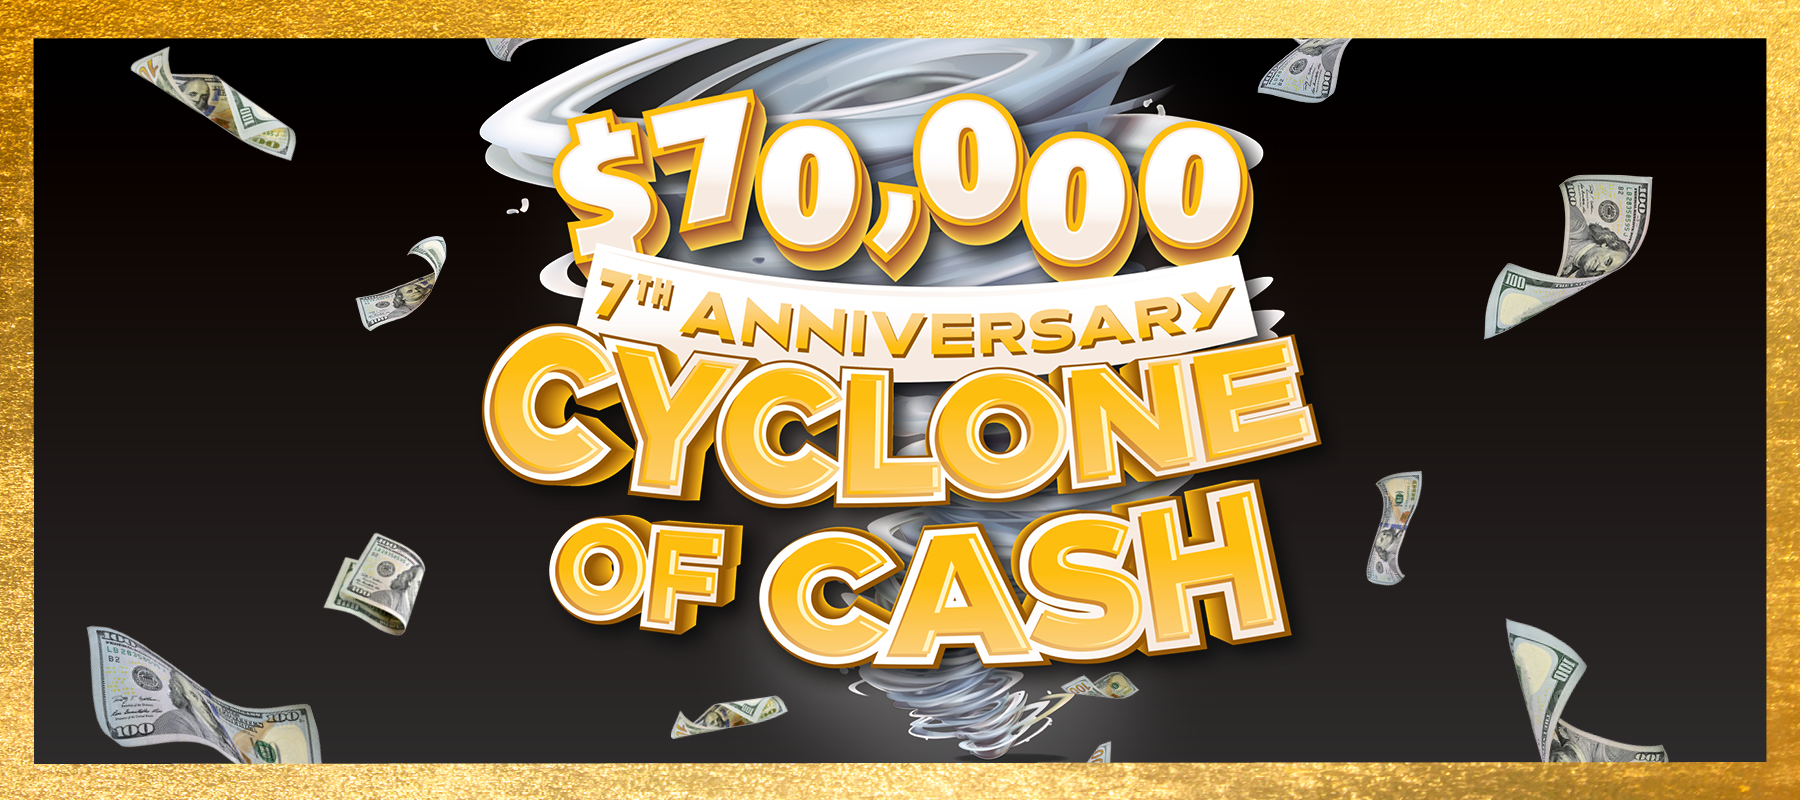 $70,000 7th Anniversary Cyclone of Cash